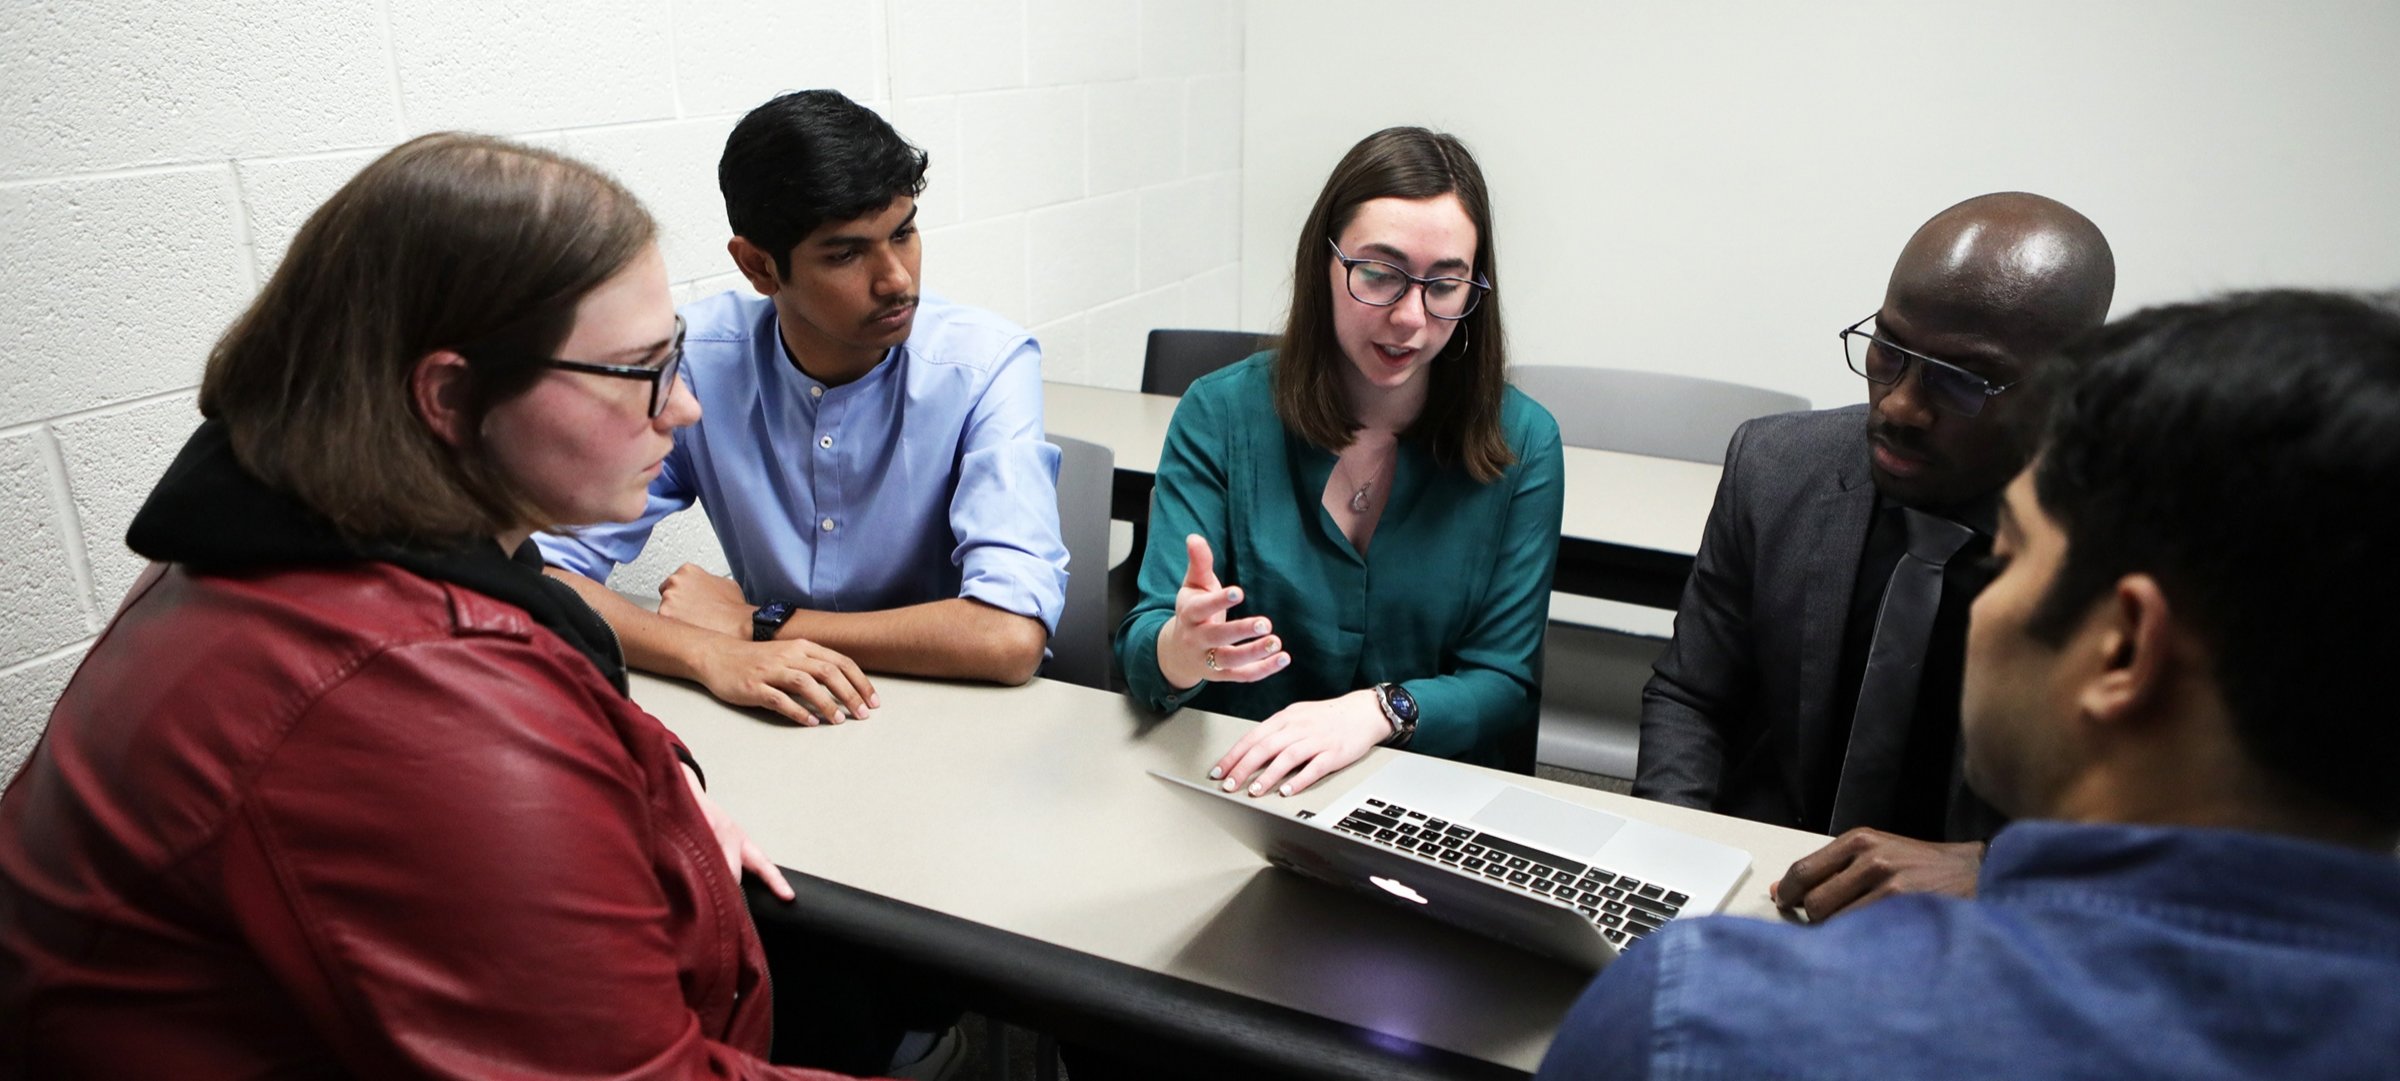 Health Informatics master's students discuss an assignment